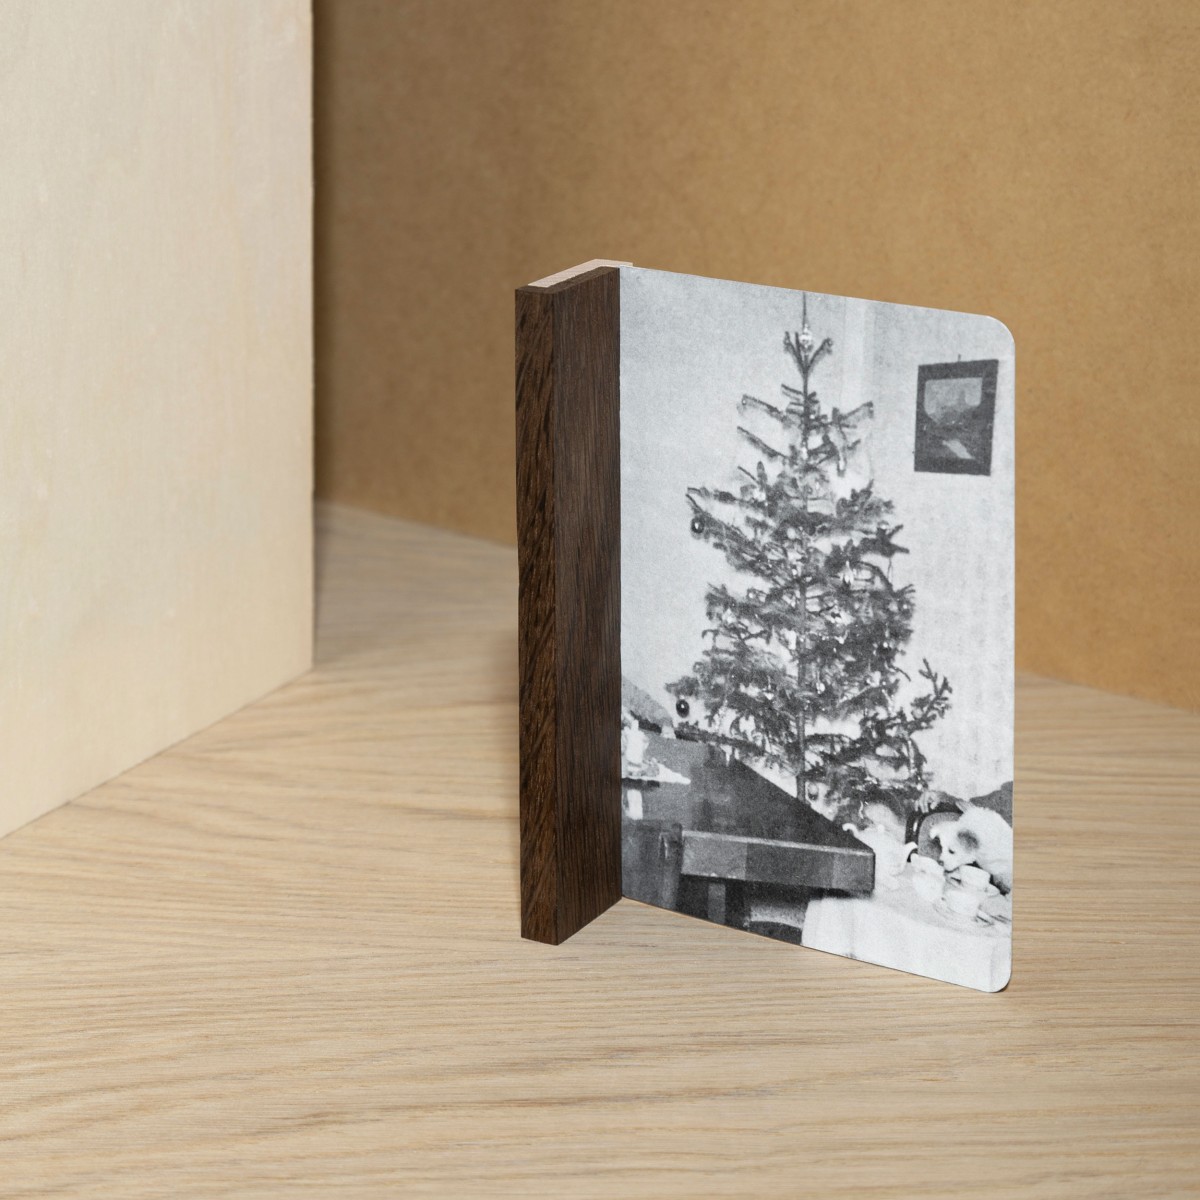 LOOP Postkarten und Fotohalter
geräuchert Eichenholz / Ahornholz - Corteccia